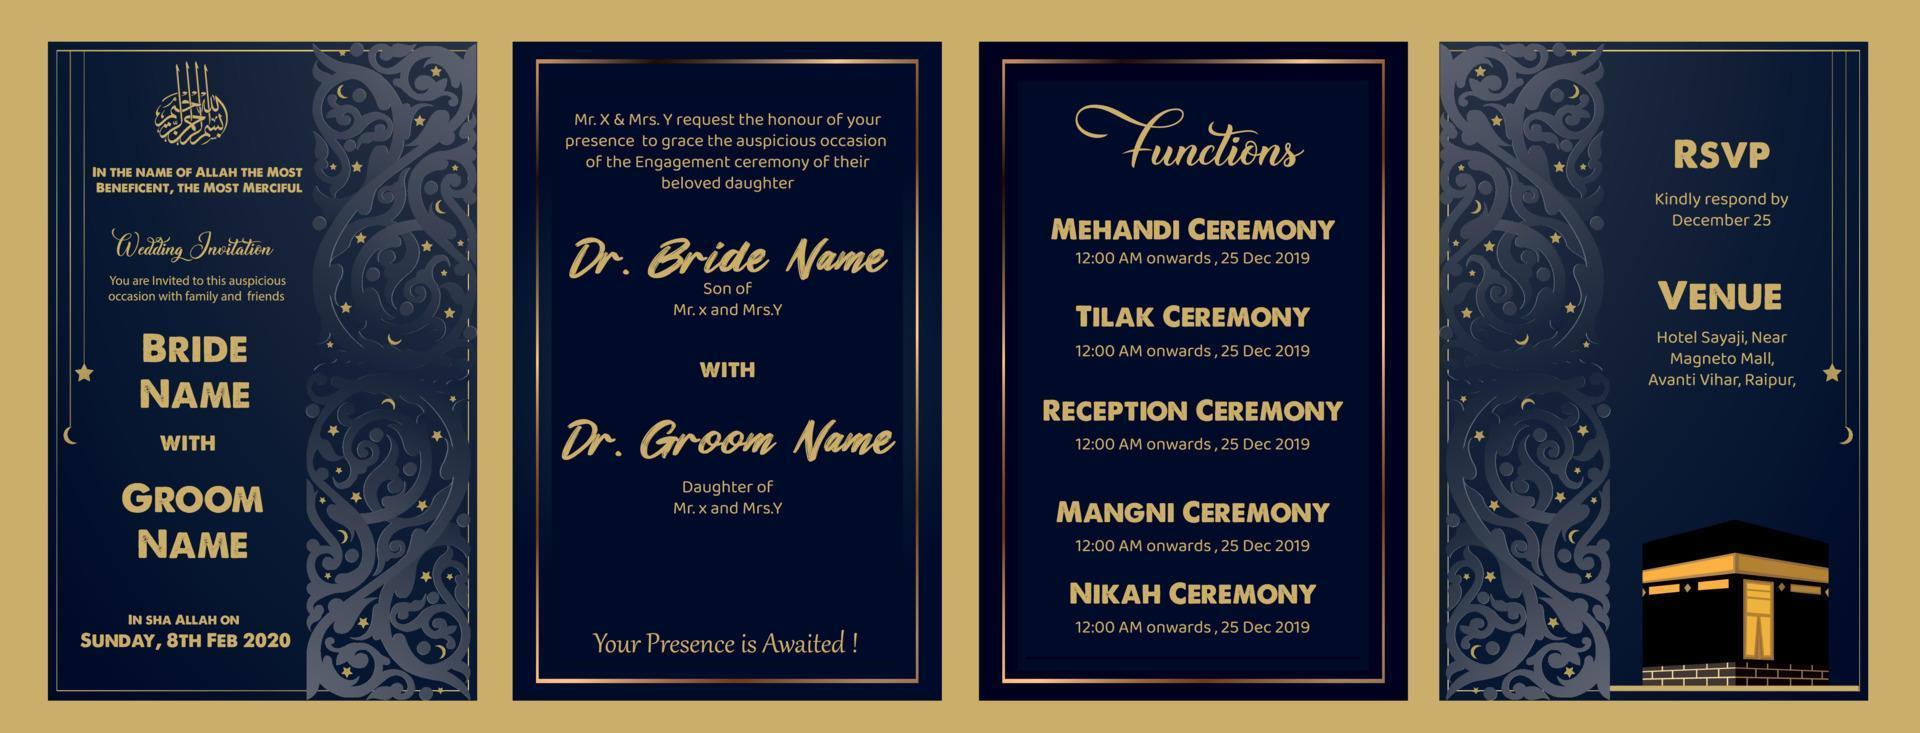 Islamic wedding invitation vector